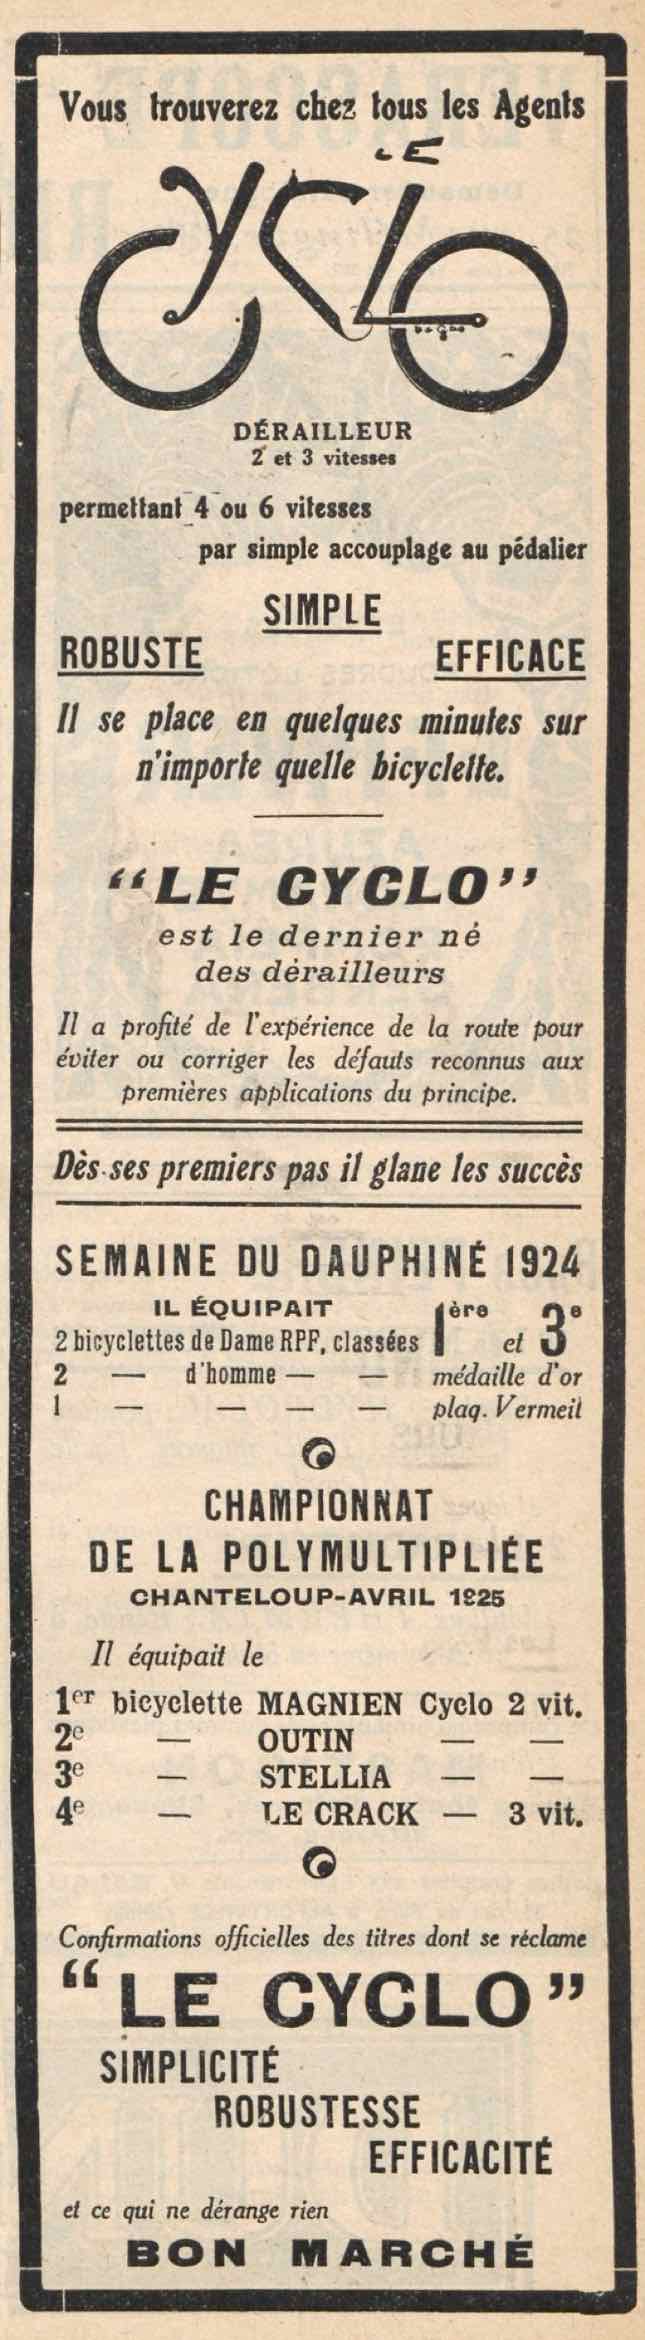 T.C.F. Revue Mensuelle June 1925 - Cyclo advert main image